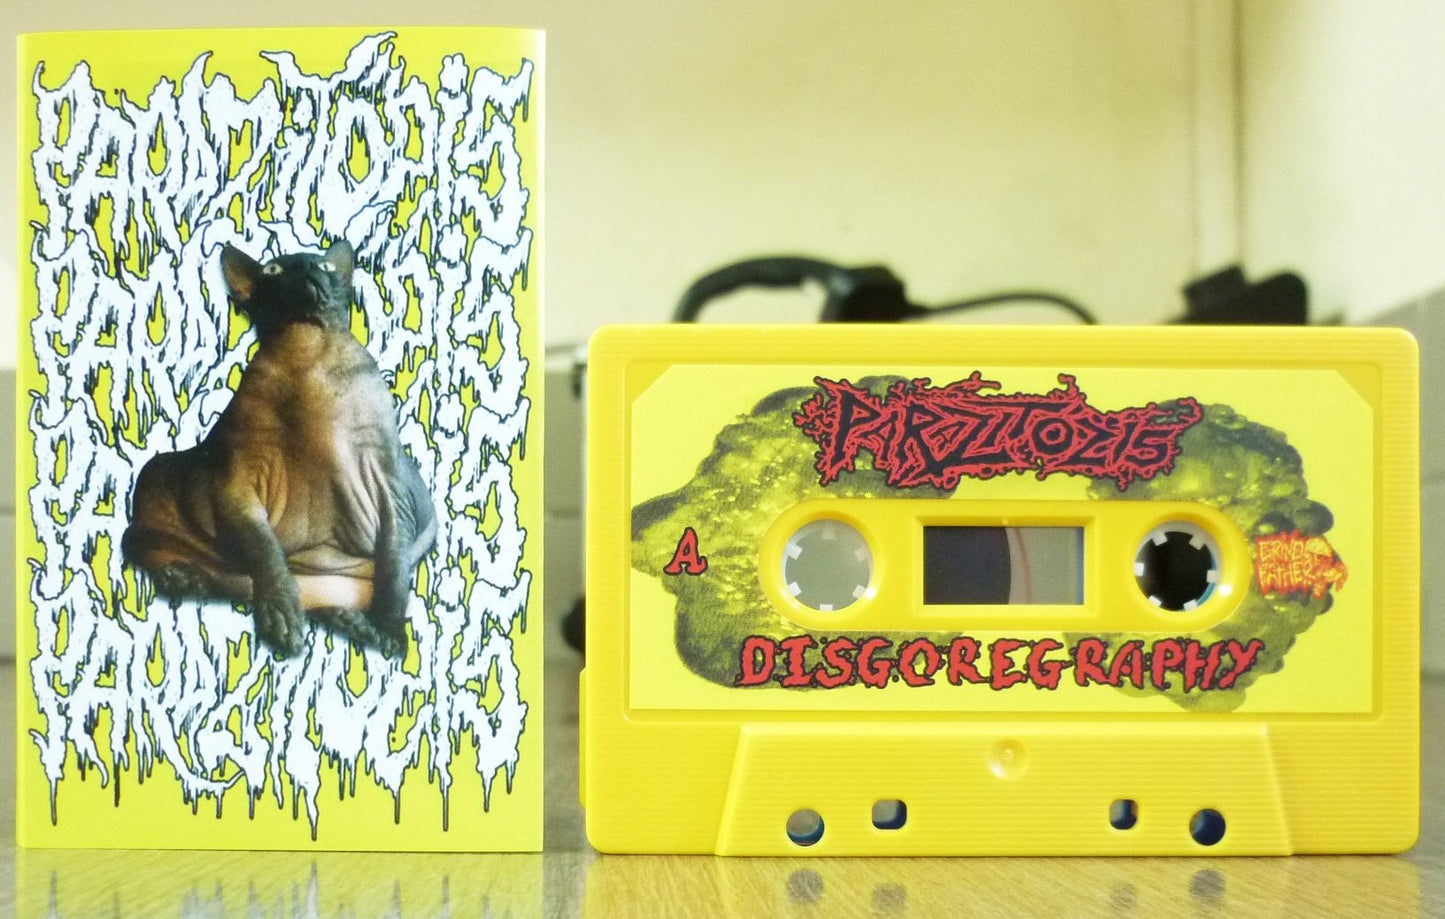 PARAZITOZIS - Disgoregraphy Tape